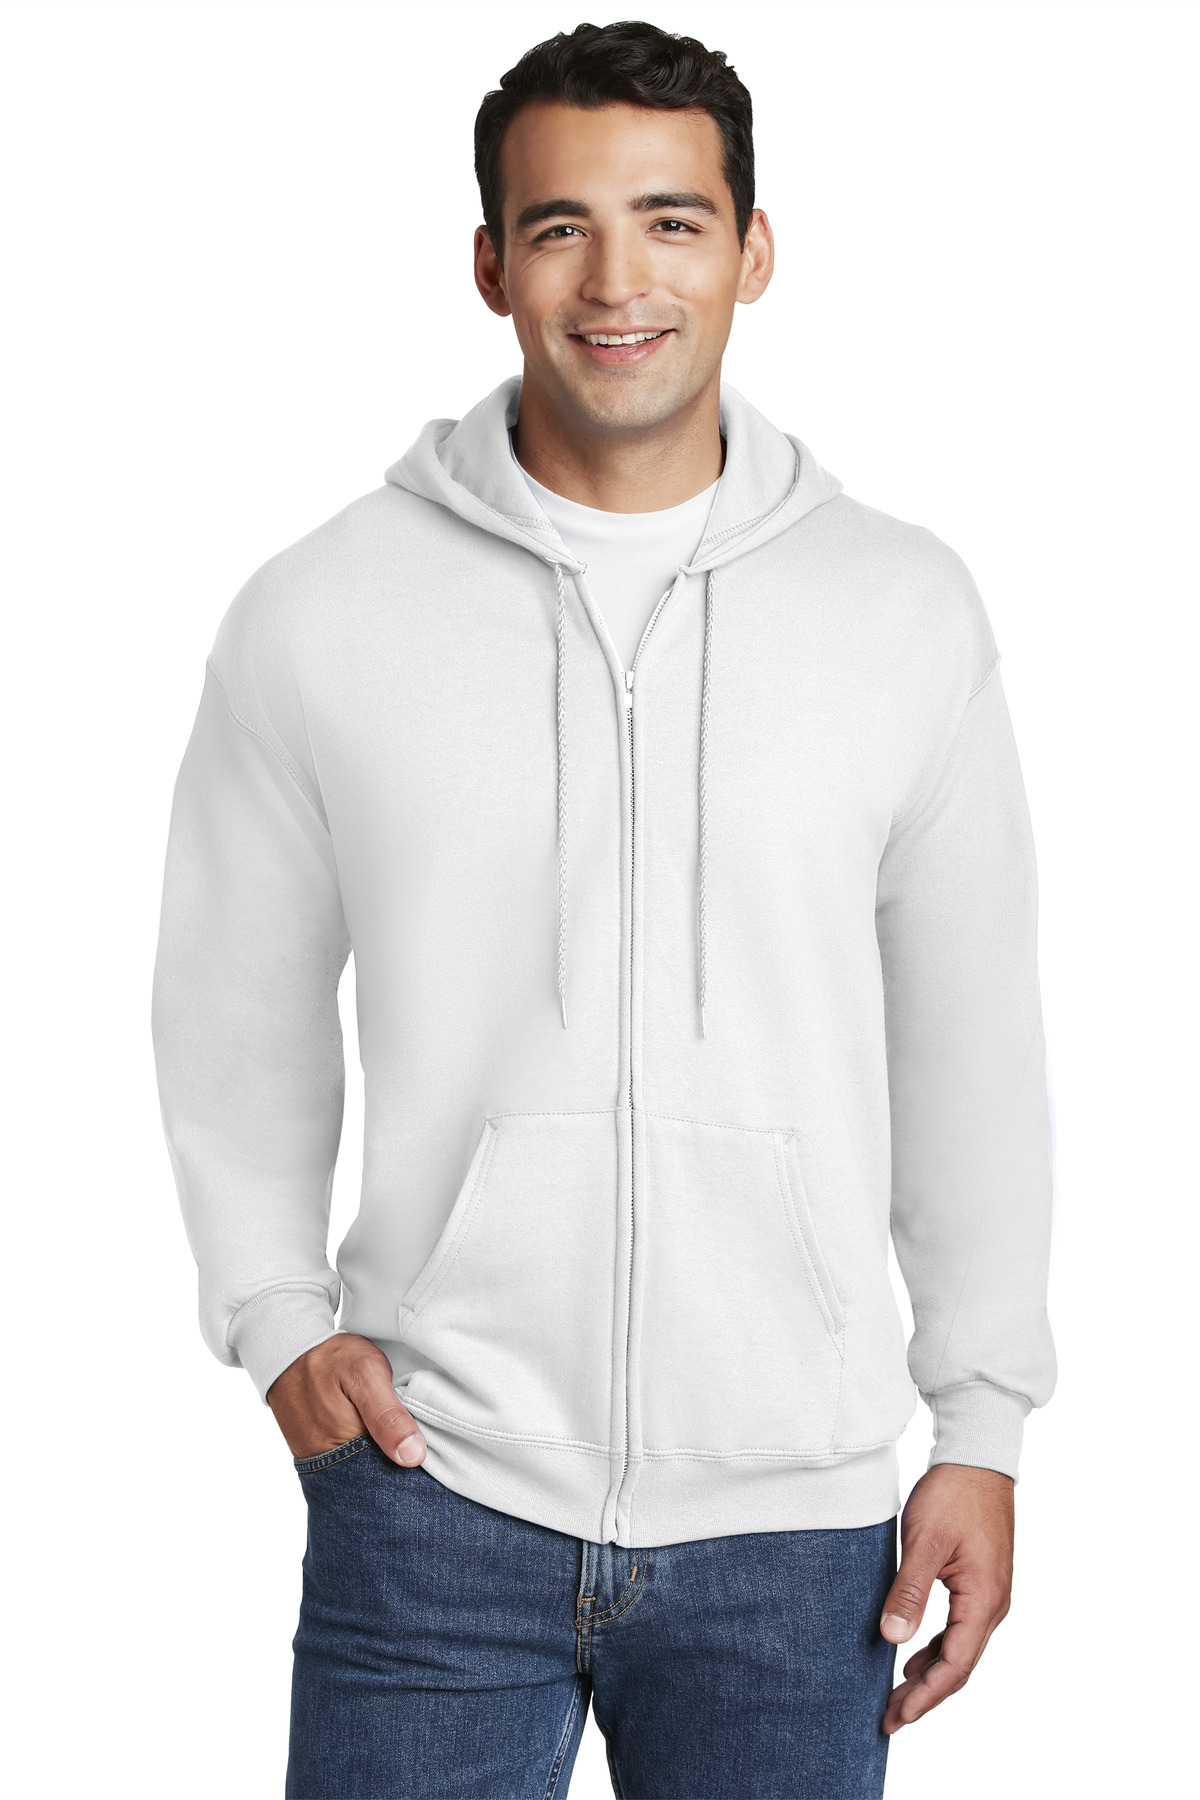 Hanes Ultimate Cotton - Full-Zip Hooded Sweatshirt-Hanes